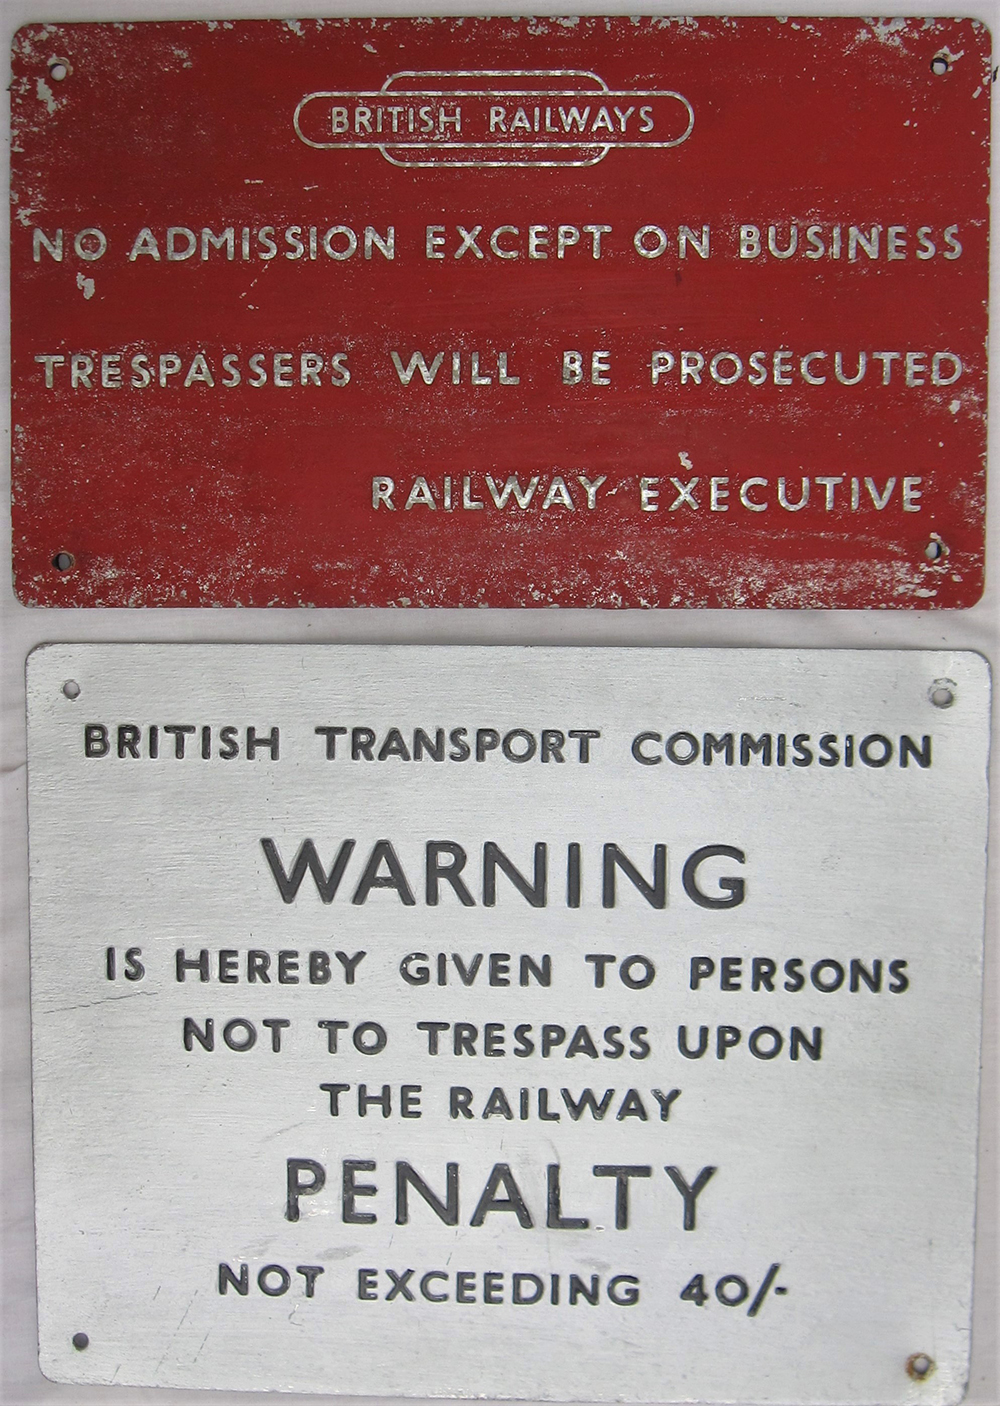 2 x BR pressed aluminium signs. BRITISH RAILWAYS, NO ADMISSION EXCEPT ON BUSINESS and BRITISH